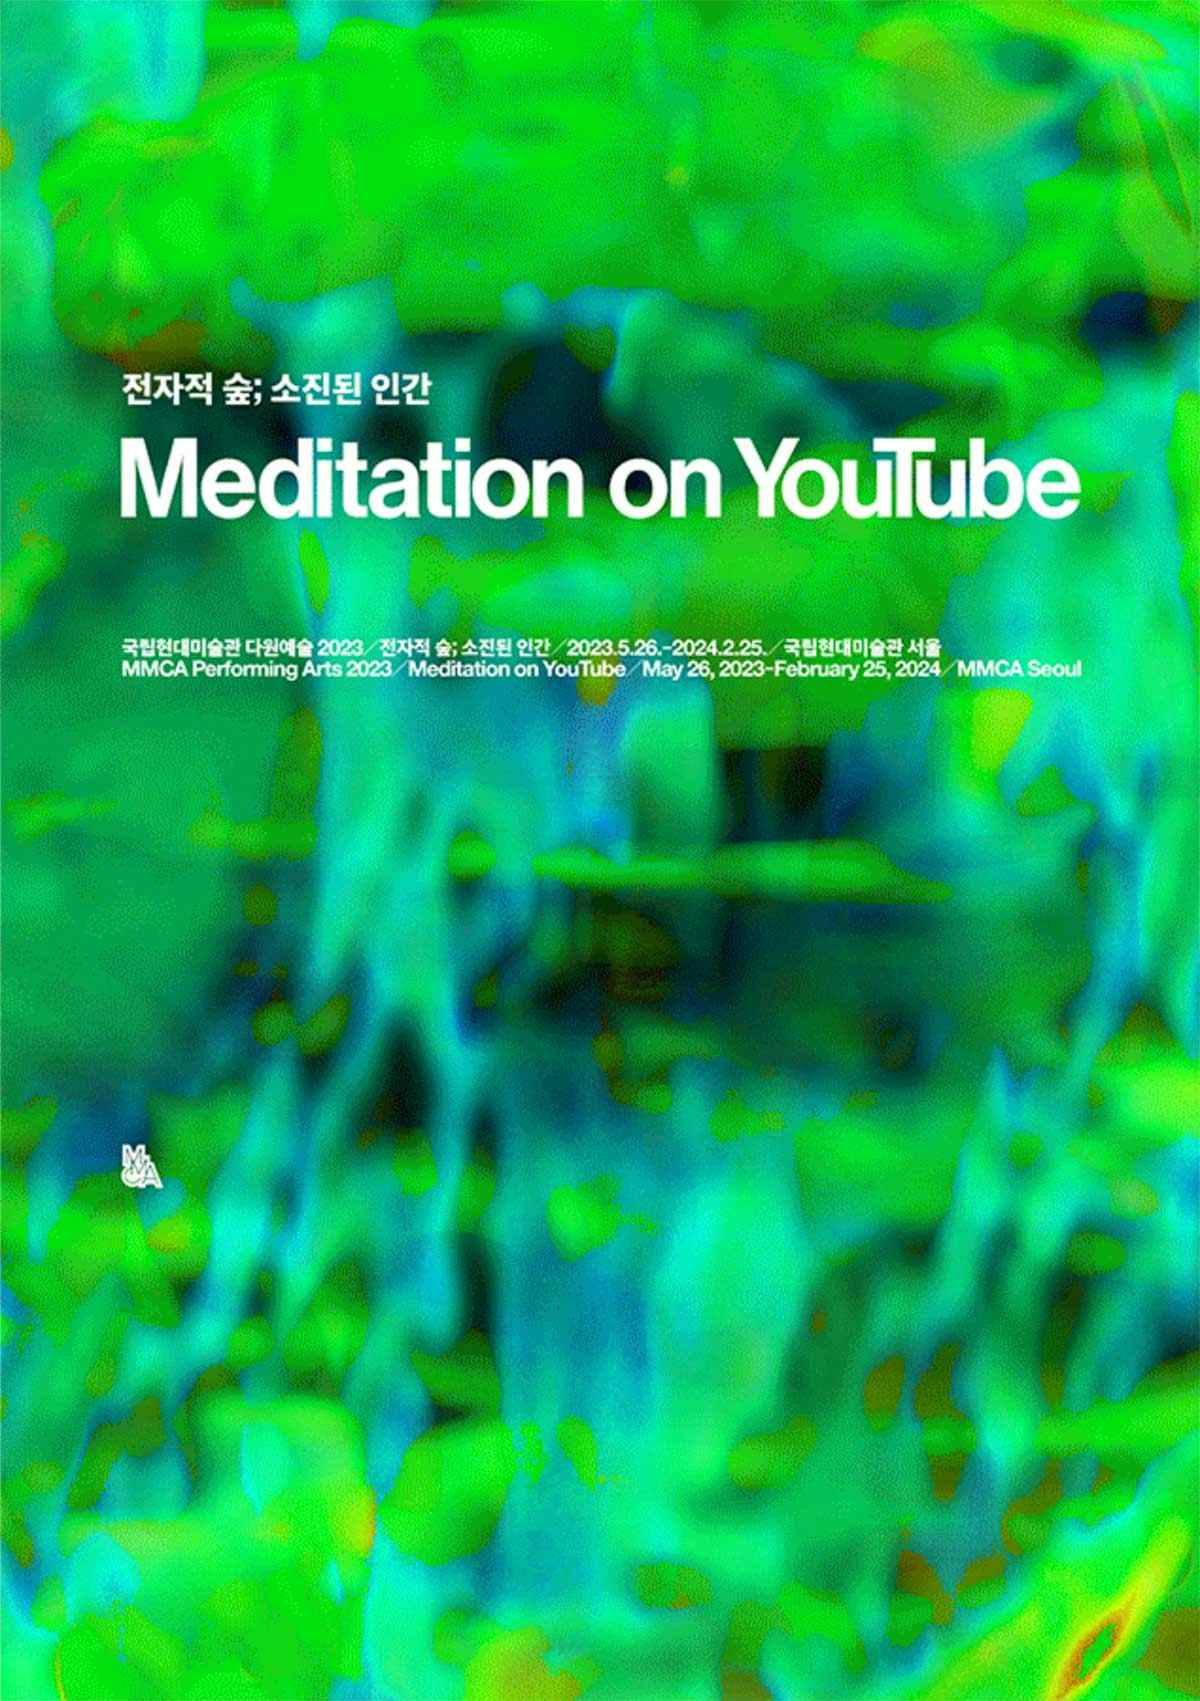 MMCA Performing Arts; Meditation on YouTube